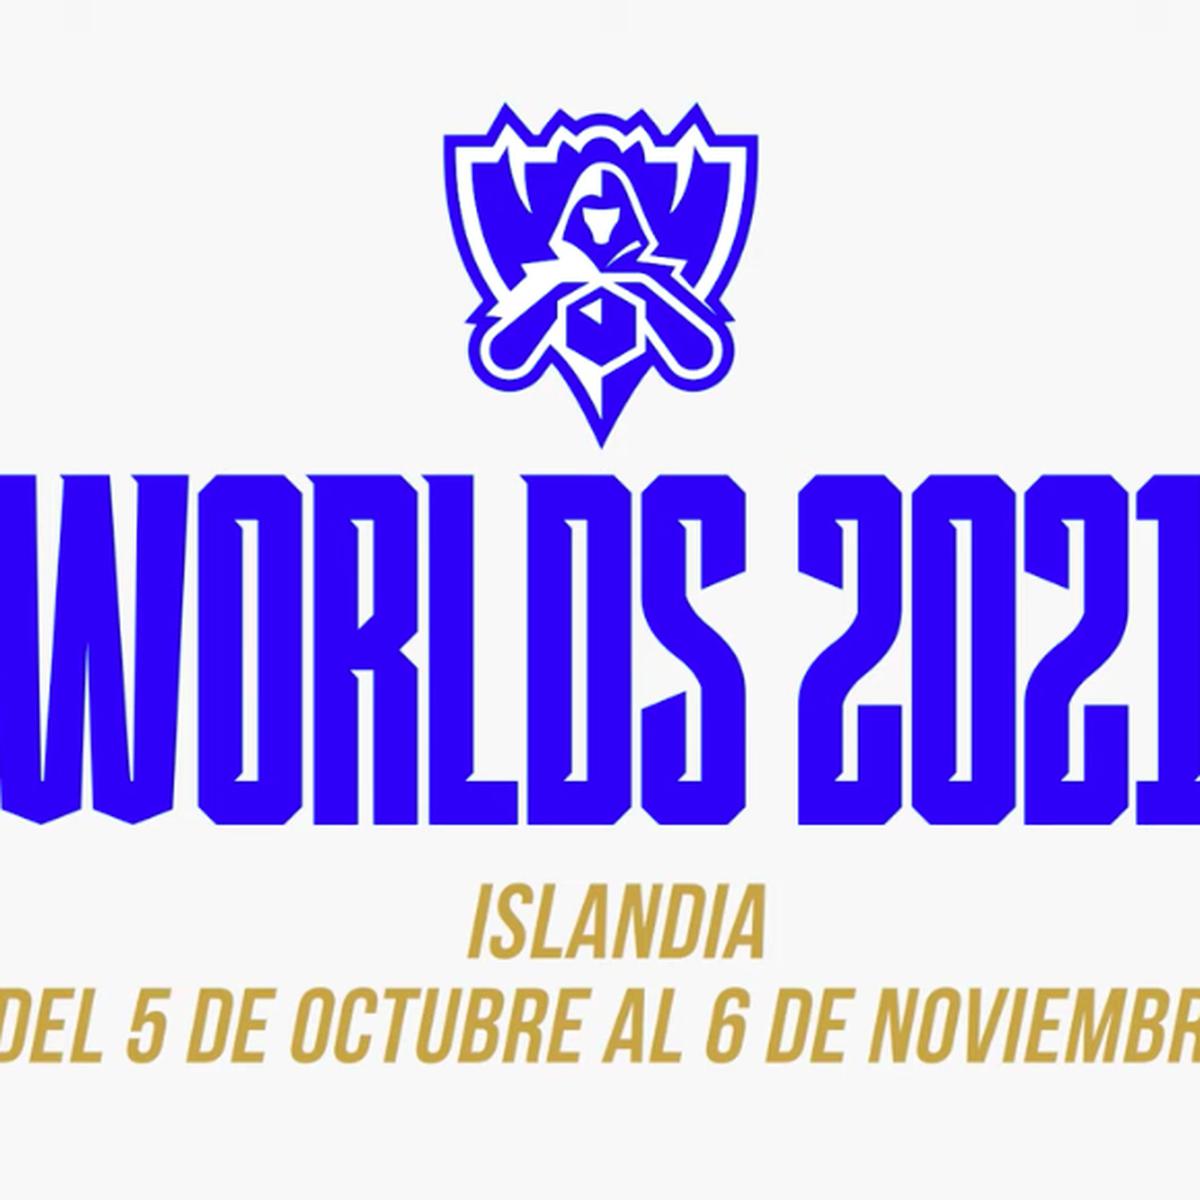 Riot confirma que Campeonato Mundial 2021 de League of Legends